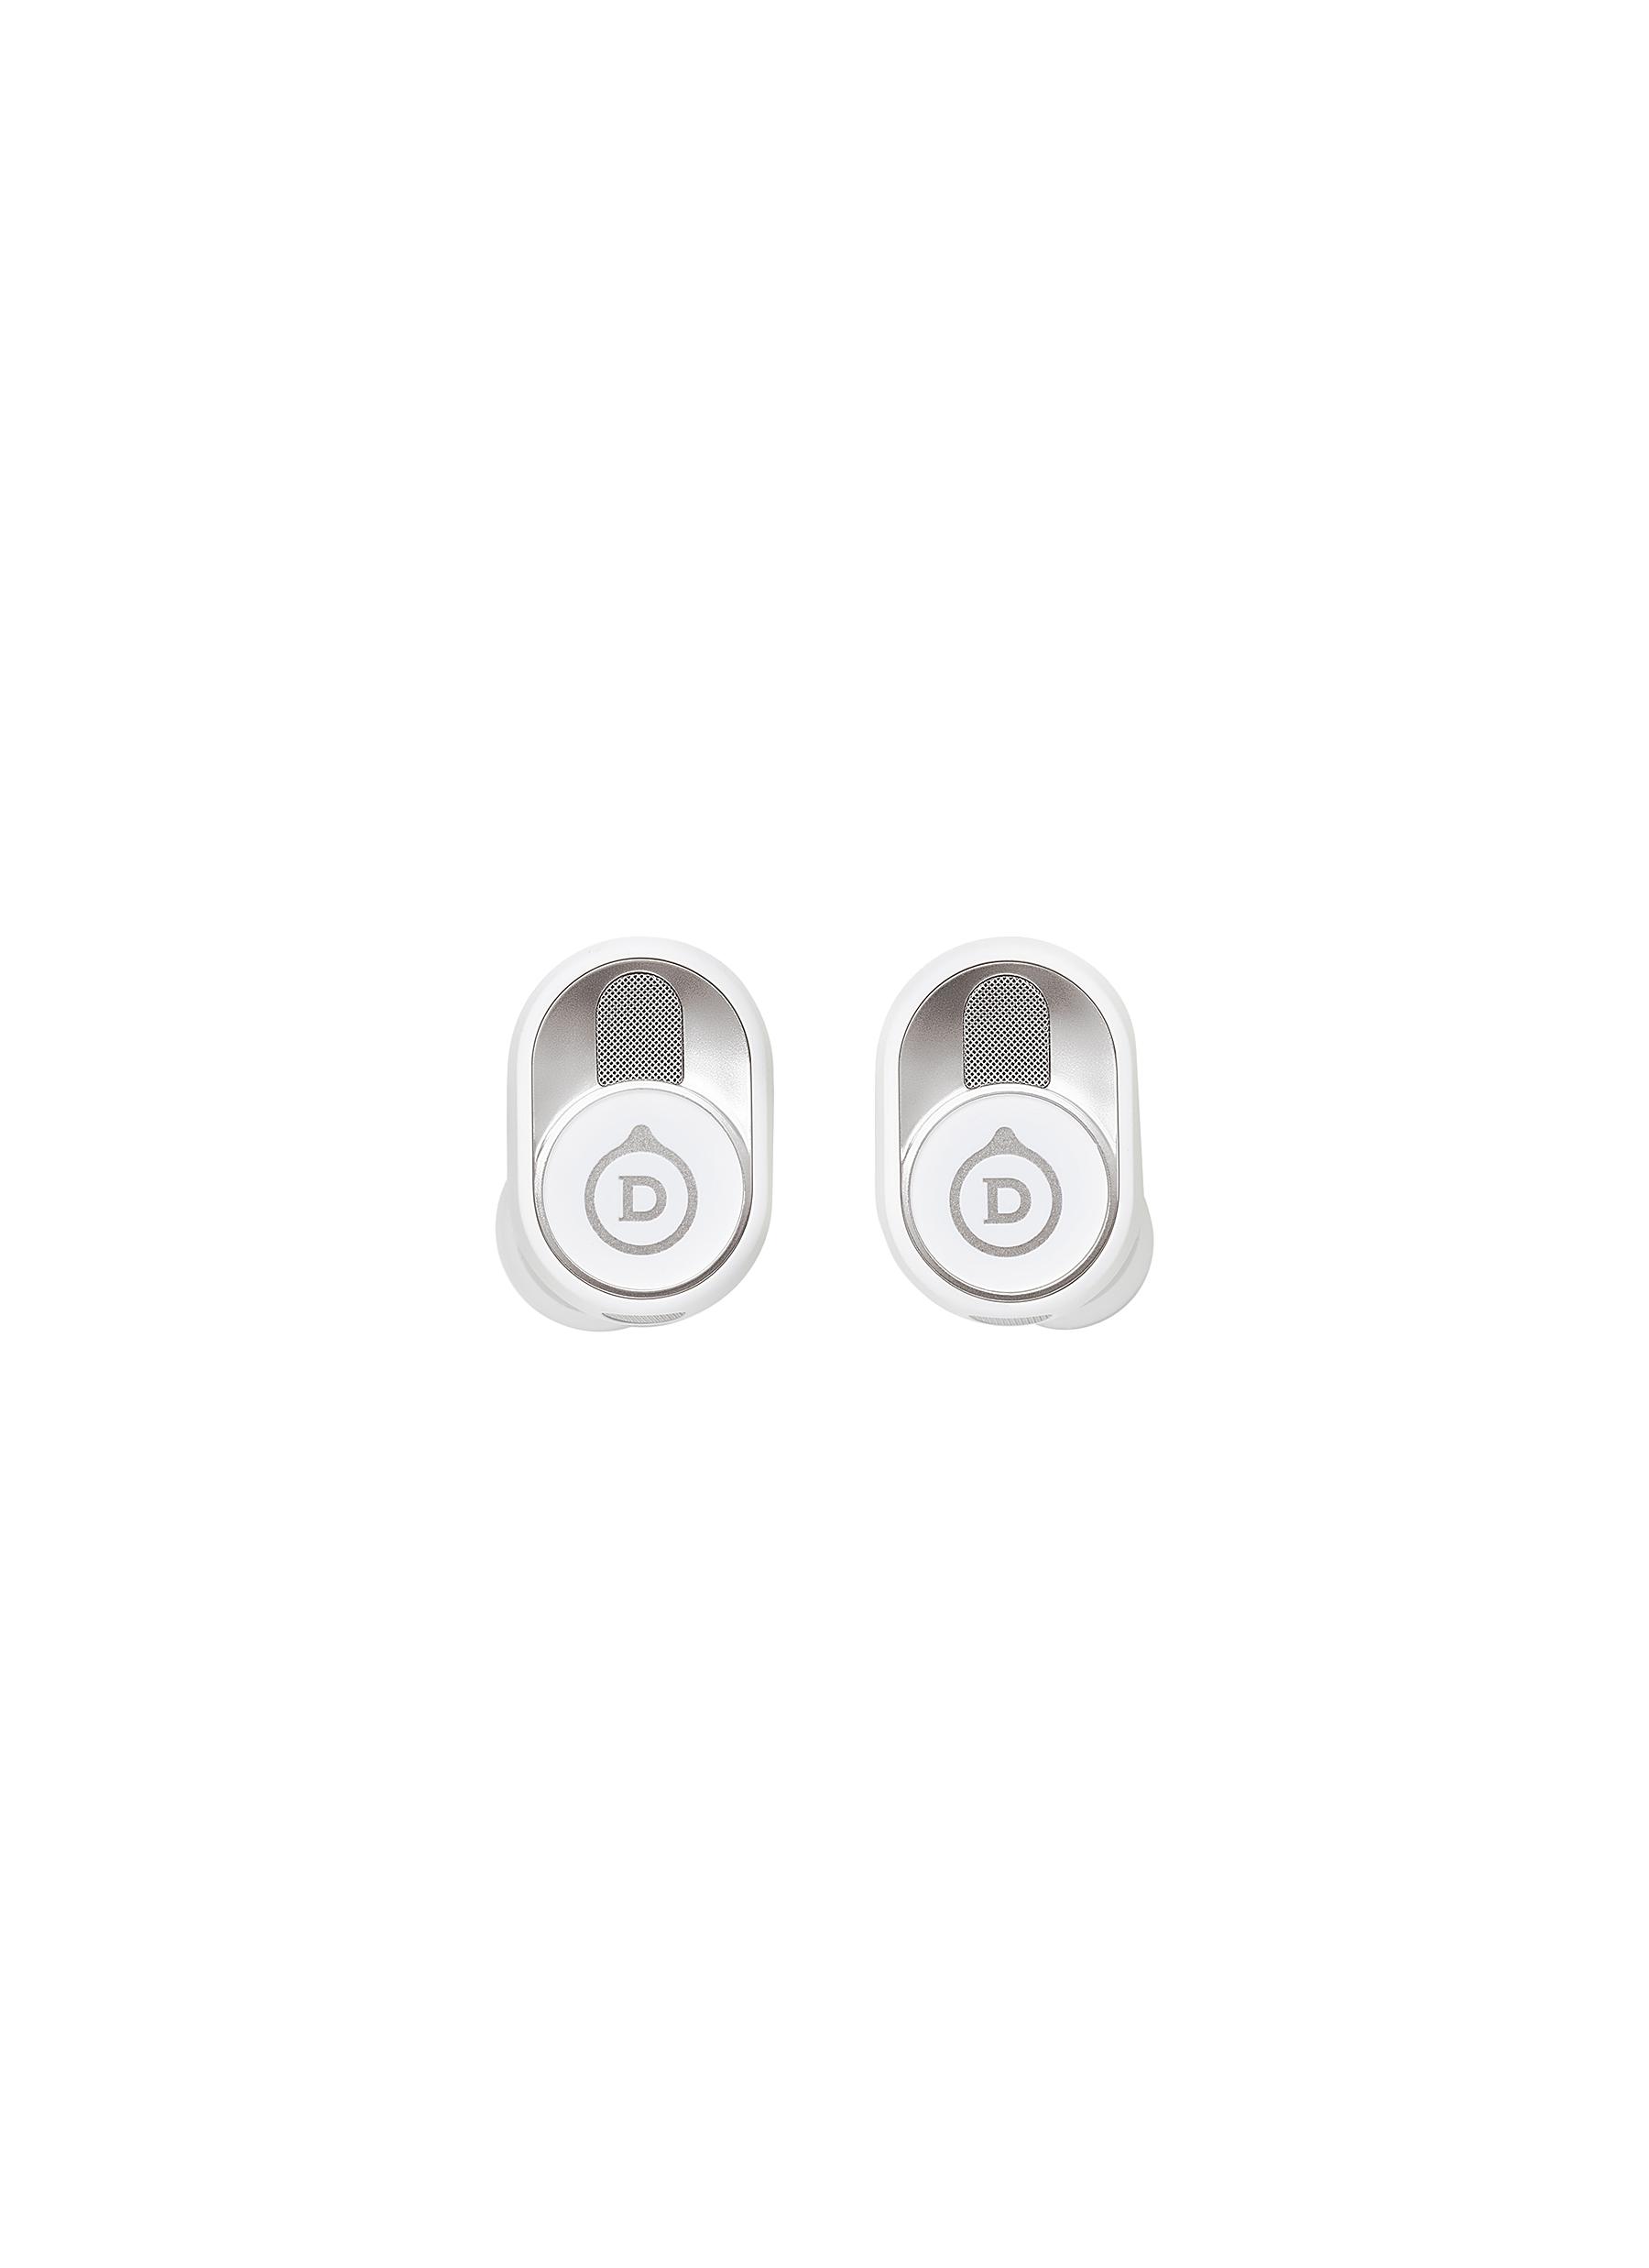 Gemini II Wireless Earbuds - Iconic White